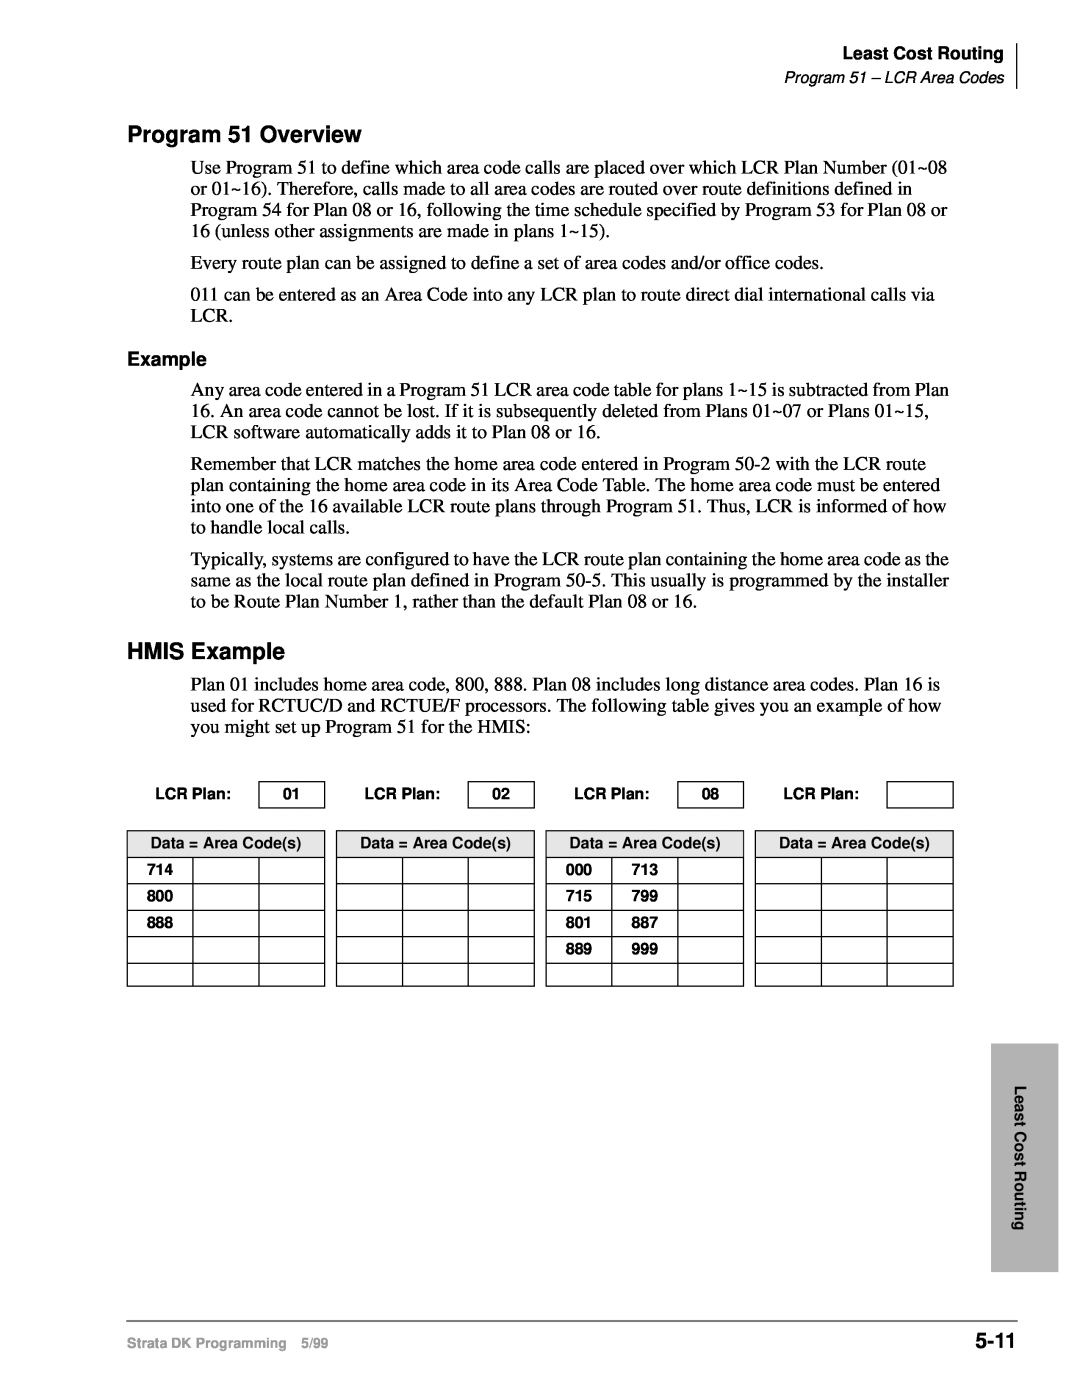 Toshiba dk14 manual Program 51 Overview, HMIS Example, 5-11 